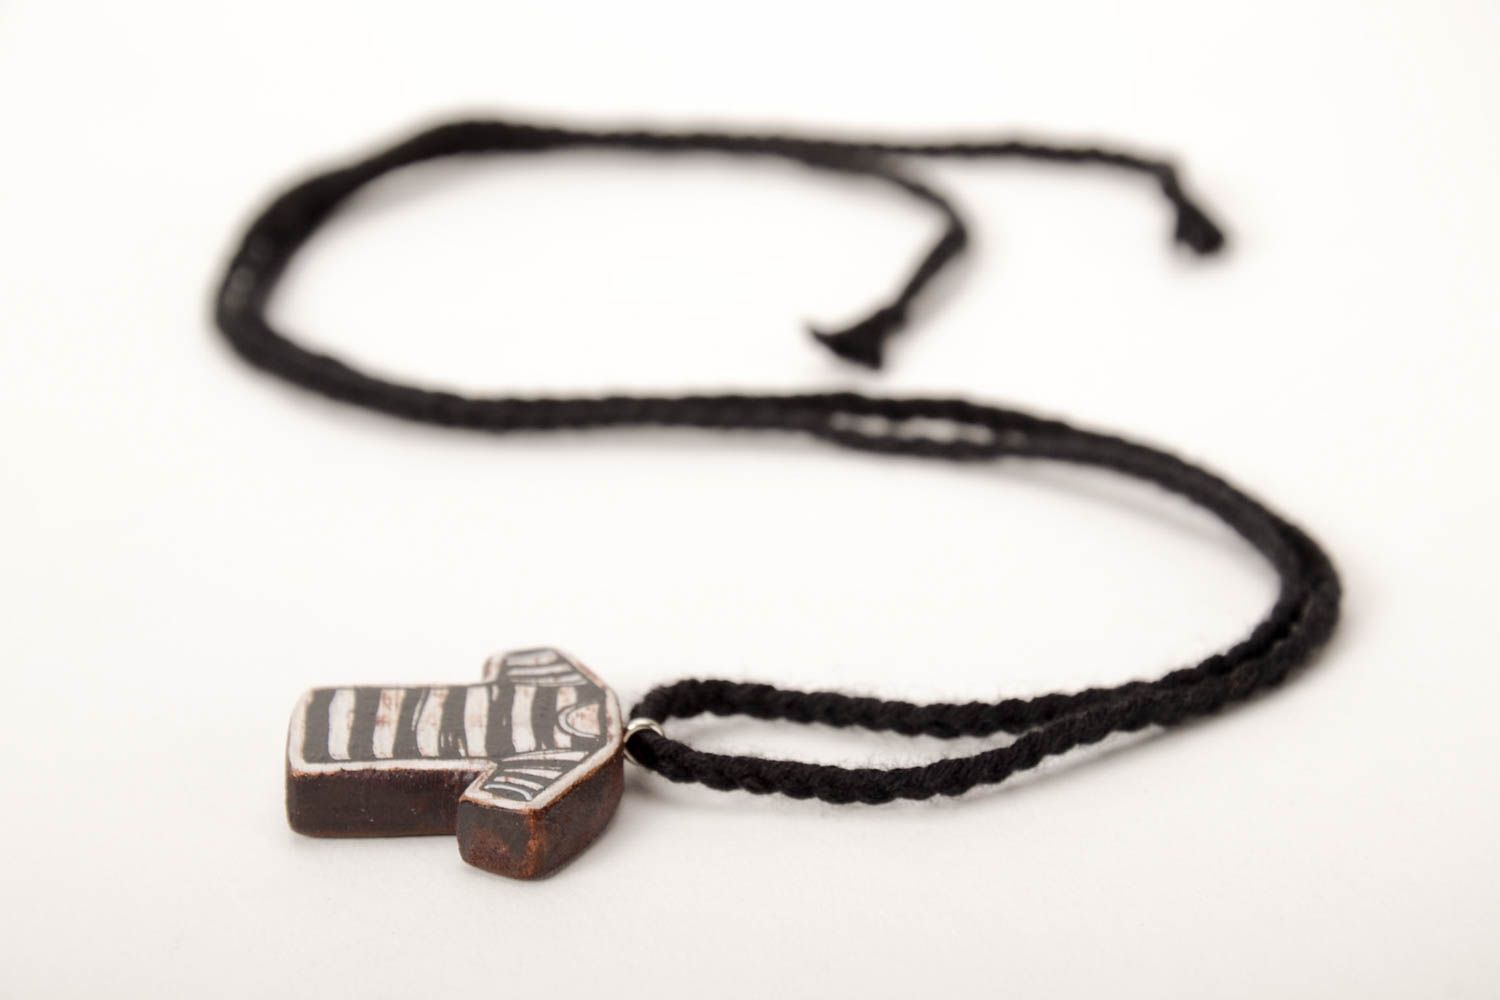 Handmade pendant designer accessory unusual jewelry wooden pendant gift ideas photo 3